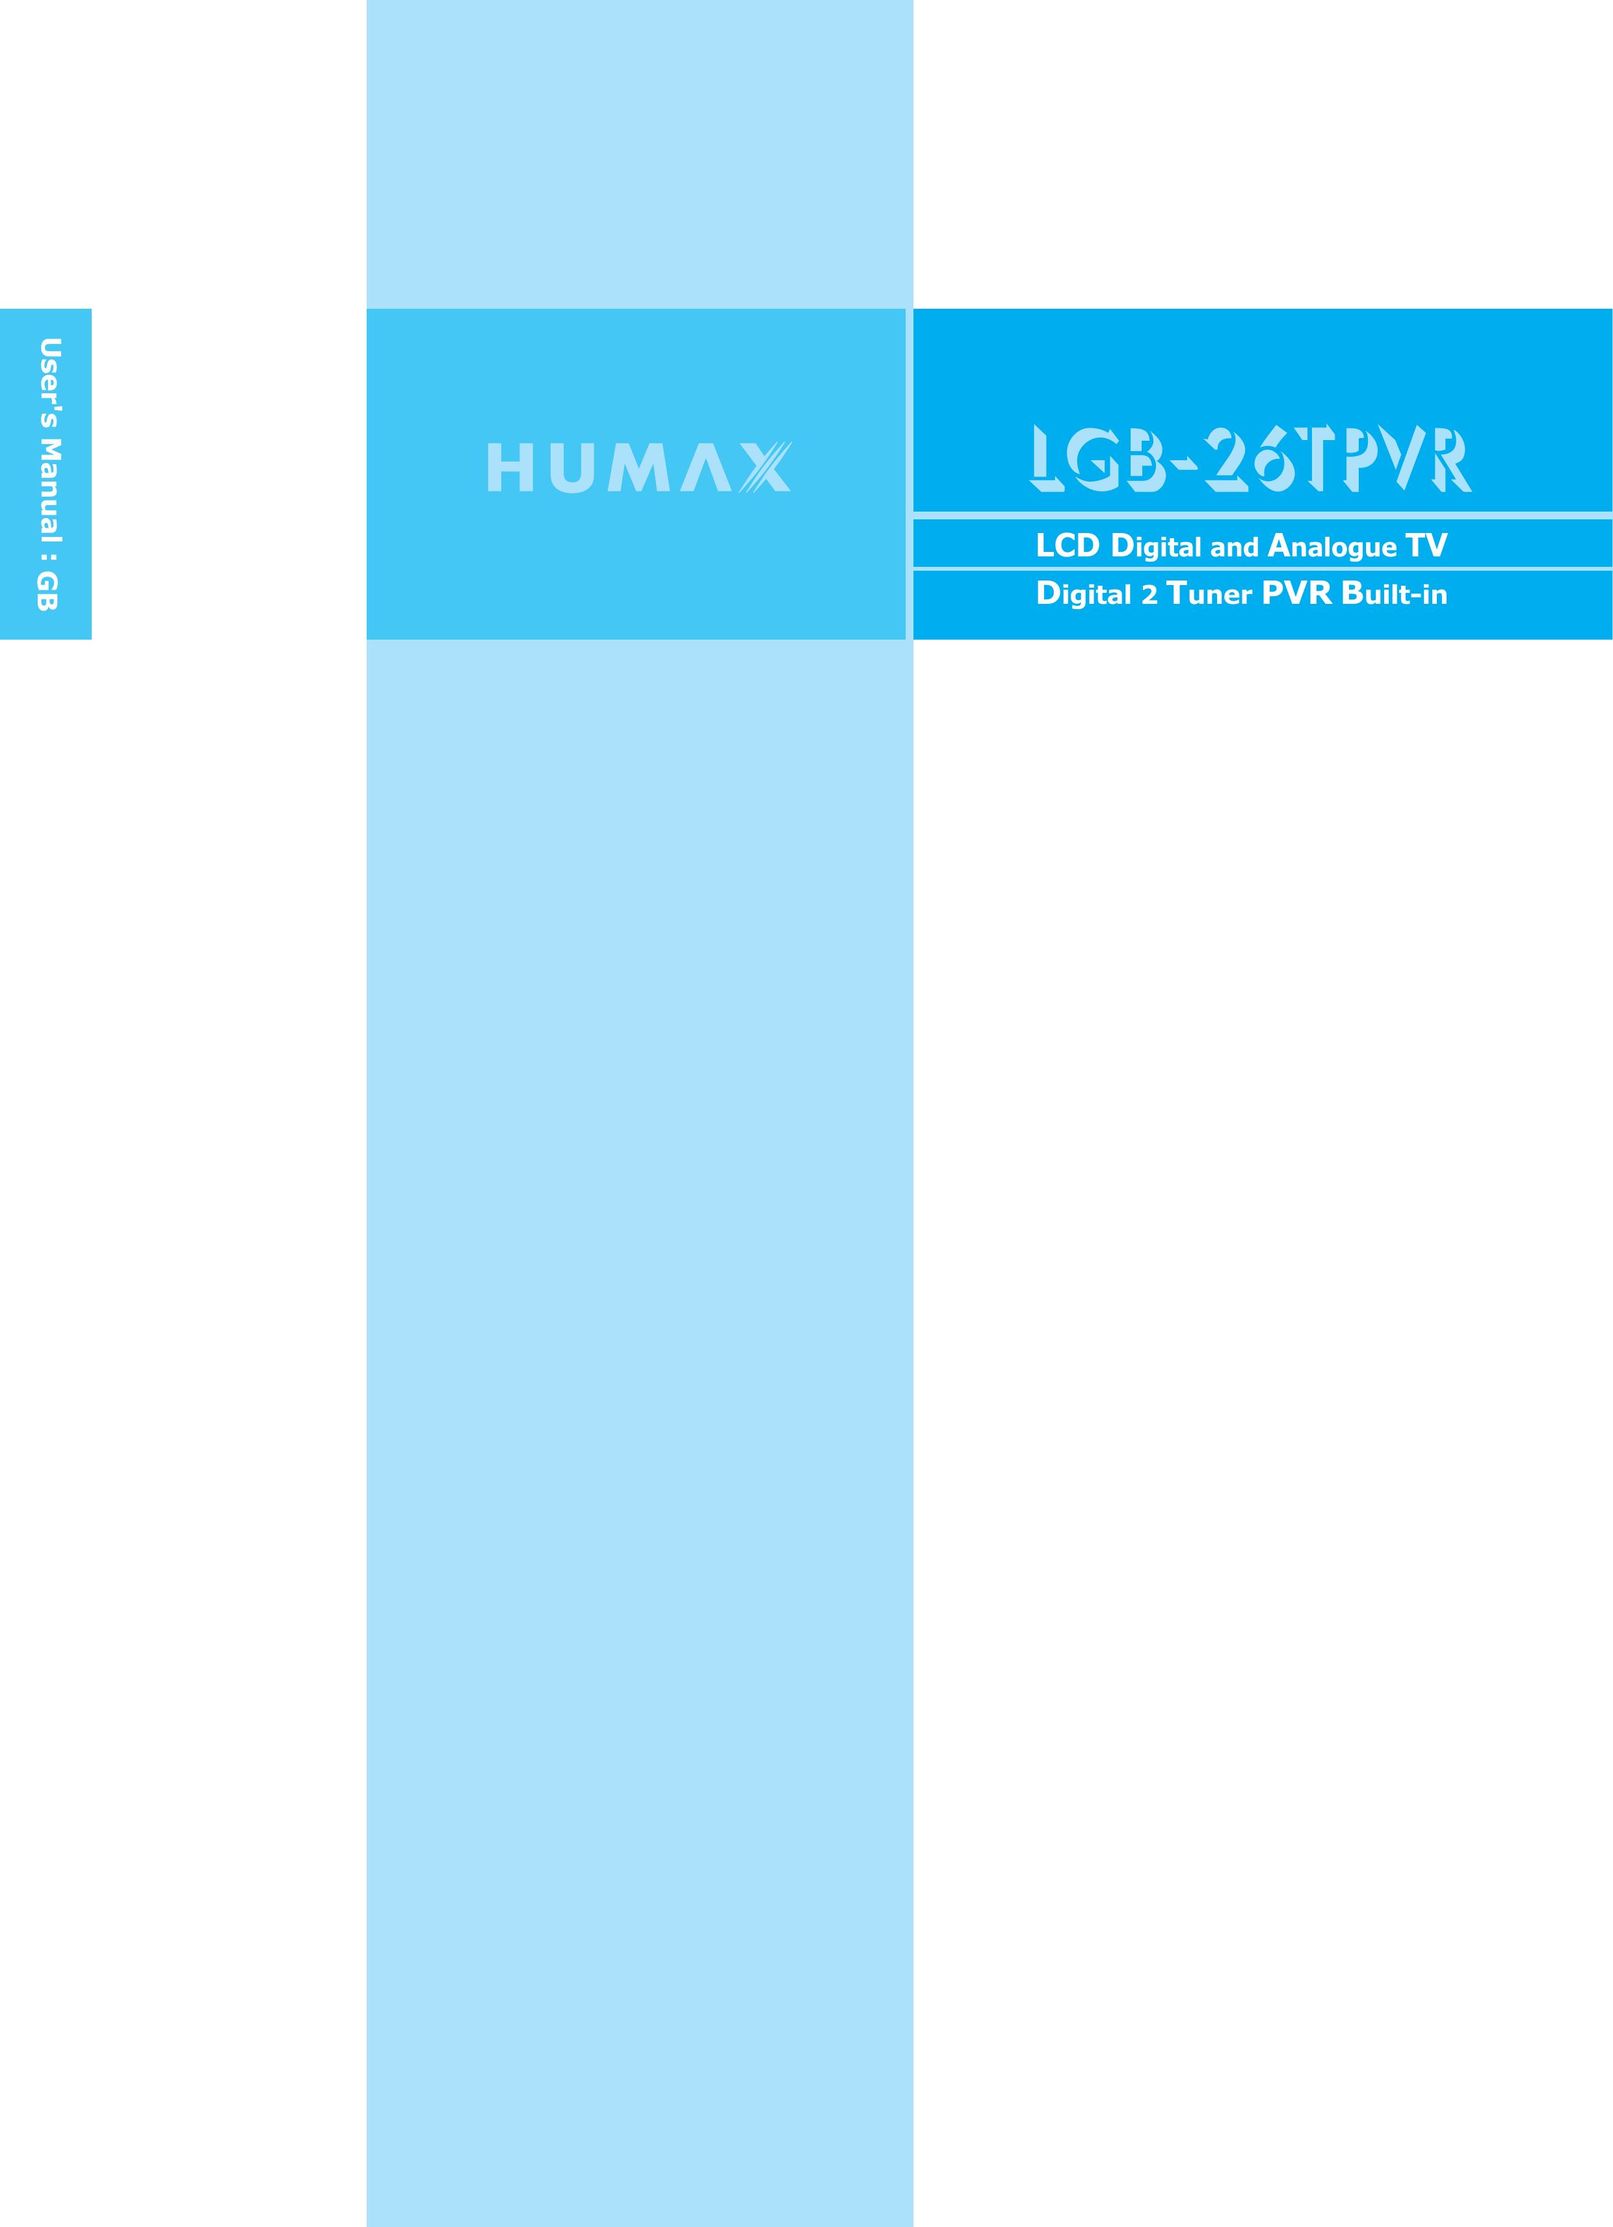 Humax LGB-26TPVR TV Receiver User Manual